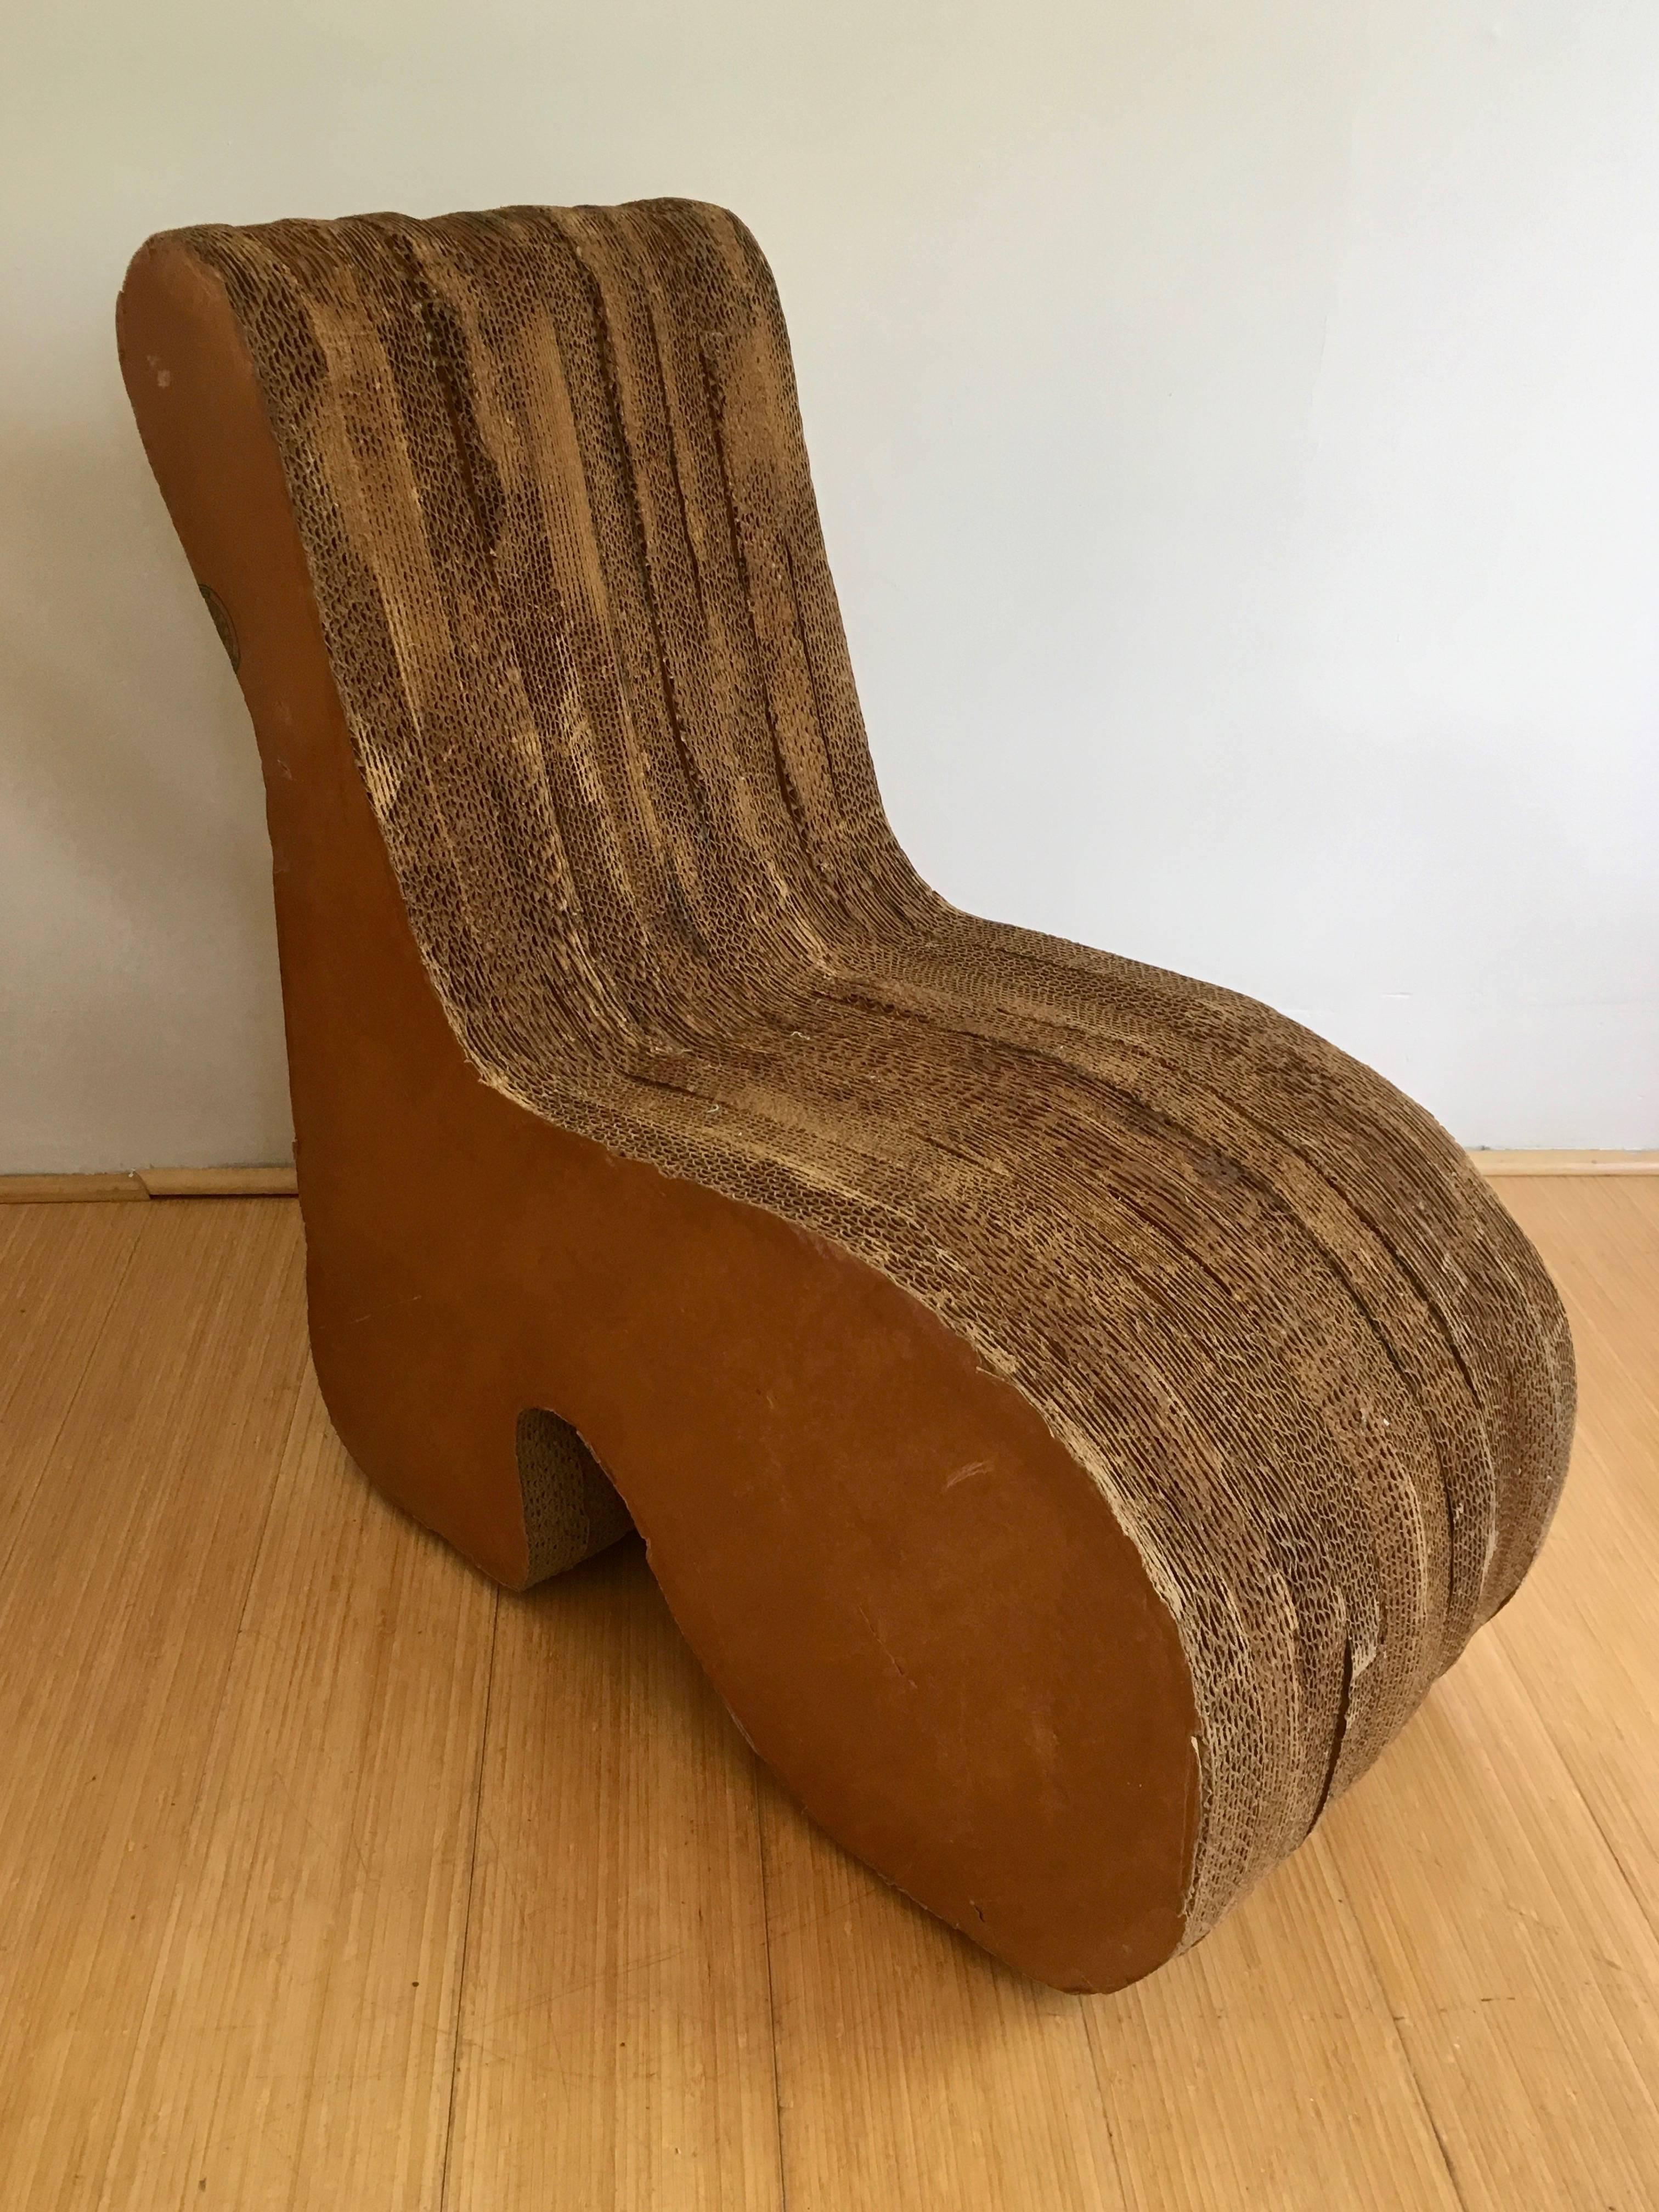 American Sculptural Cardboard Chair For Sale